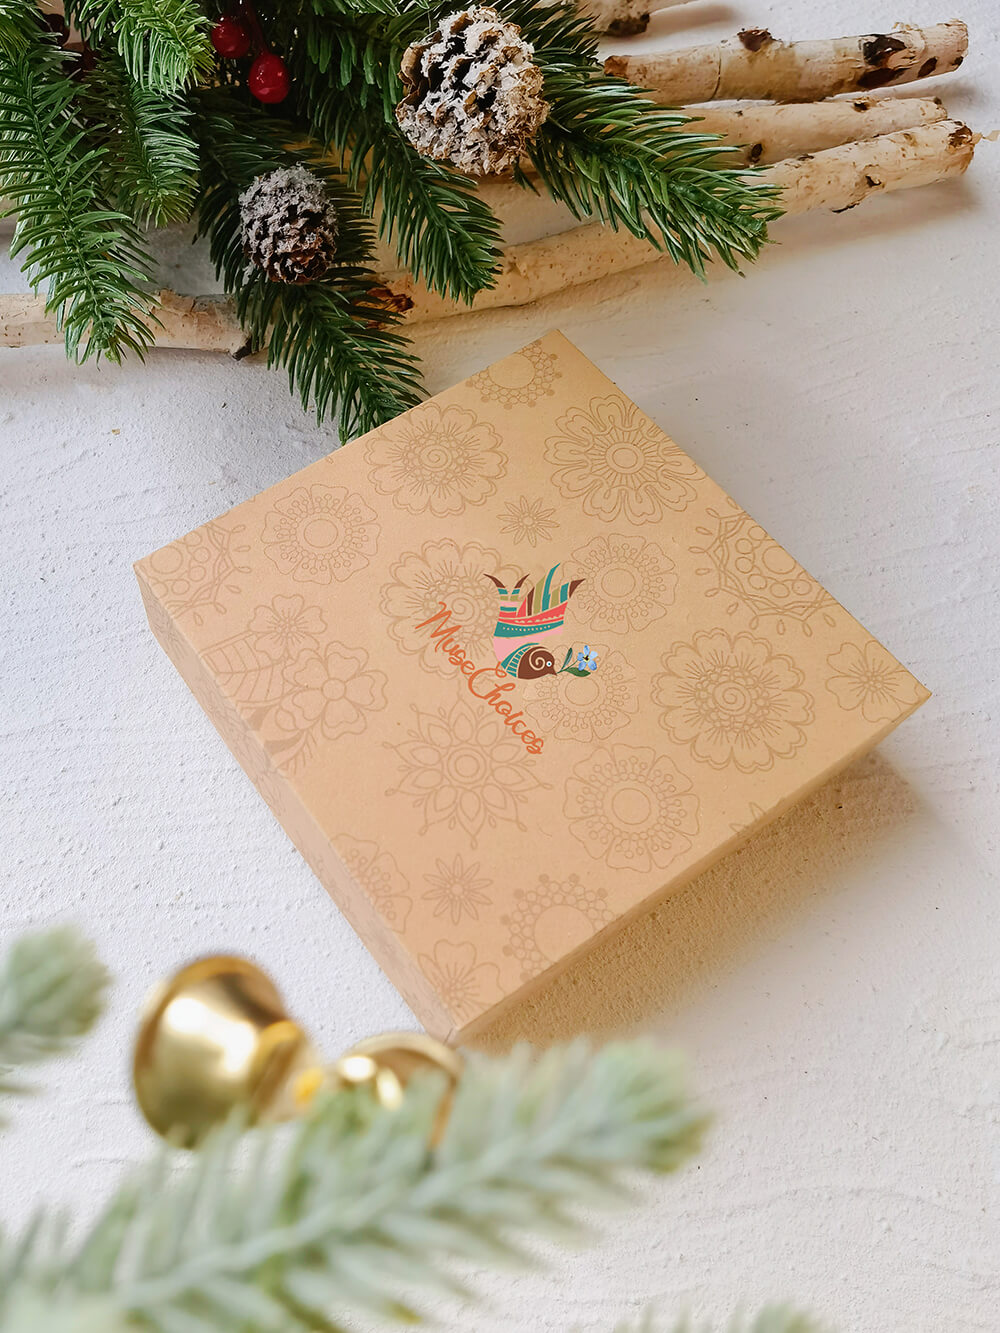 Gold-Plated 'Jingle Bells' Christmas Earrings